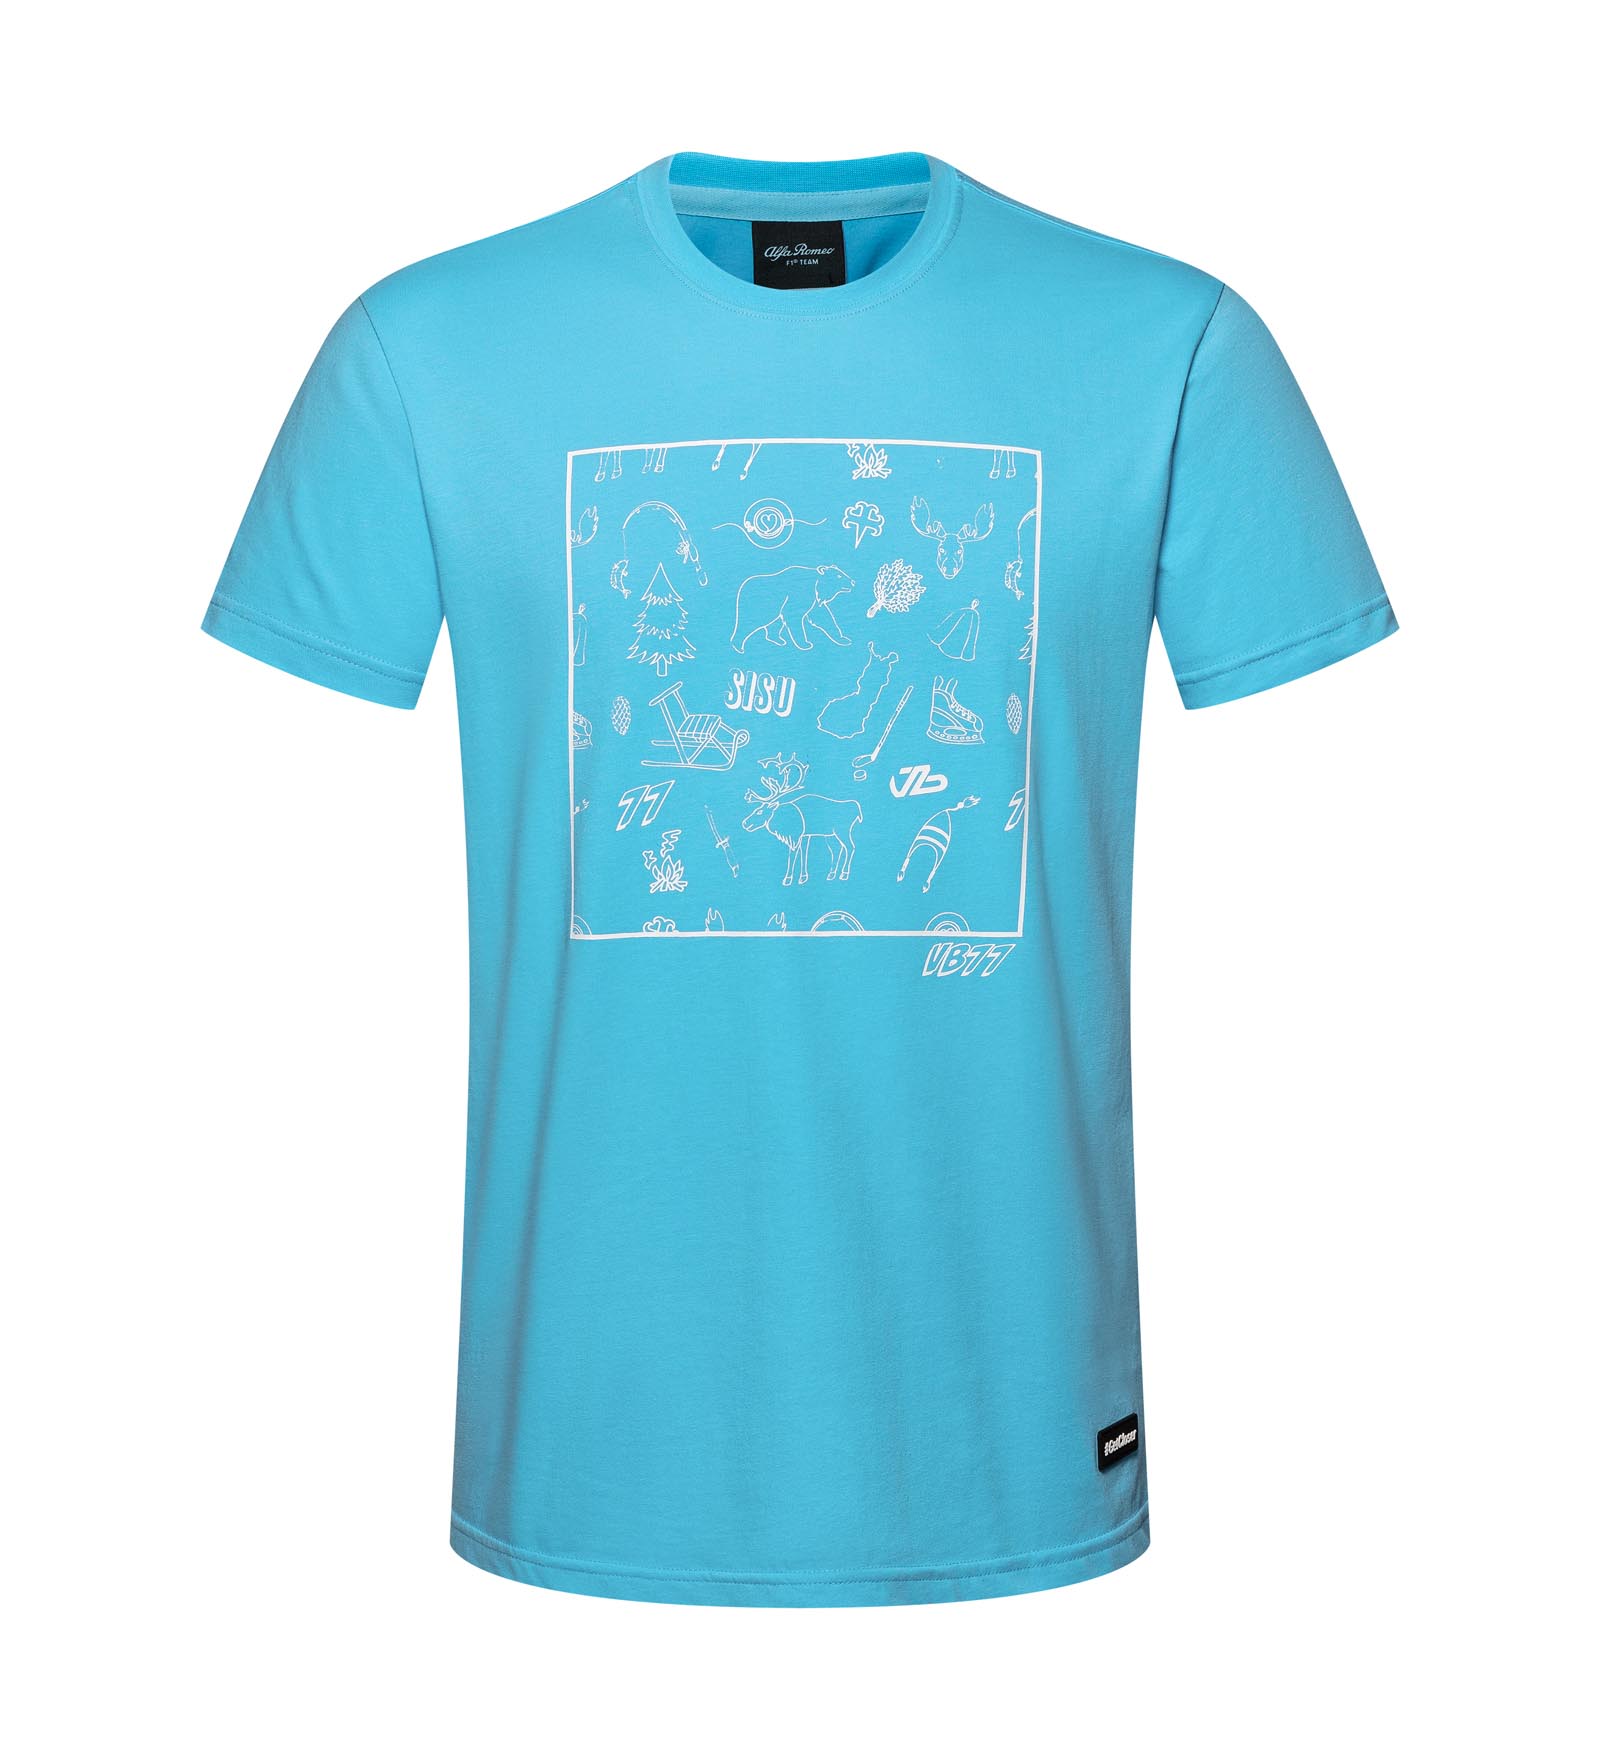 T-Shirt #TeamBottas Bleu L Valtteri Bottas